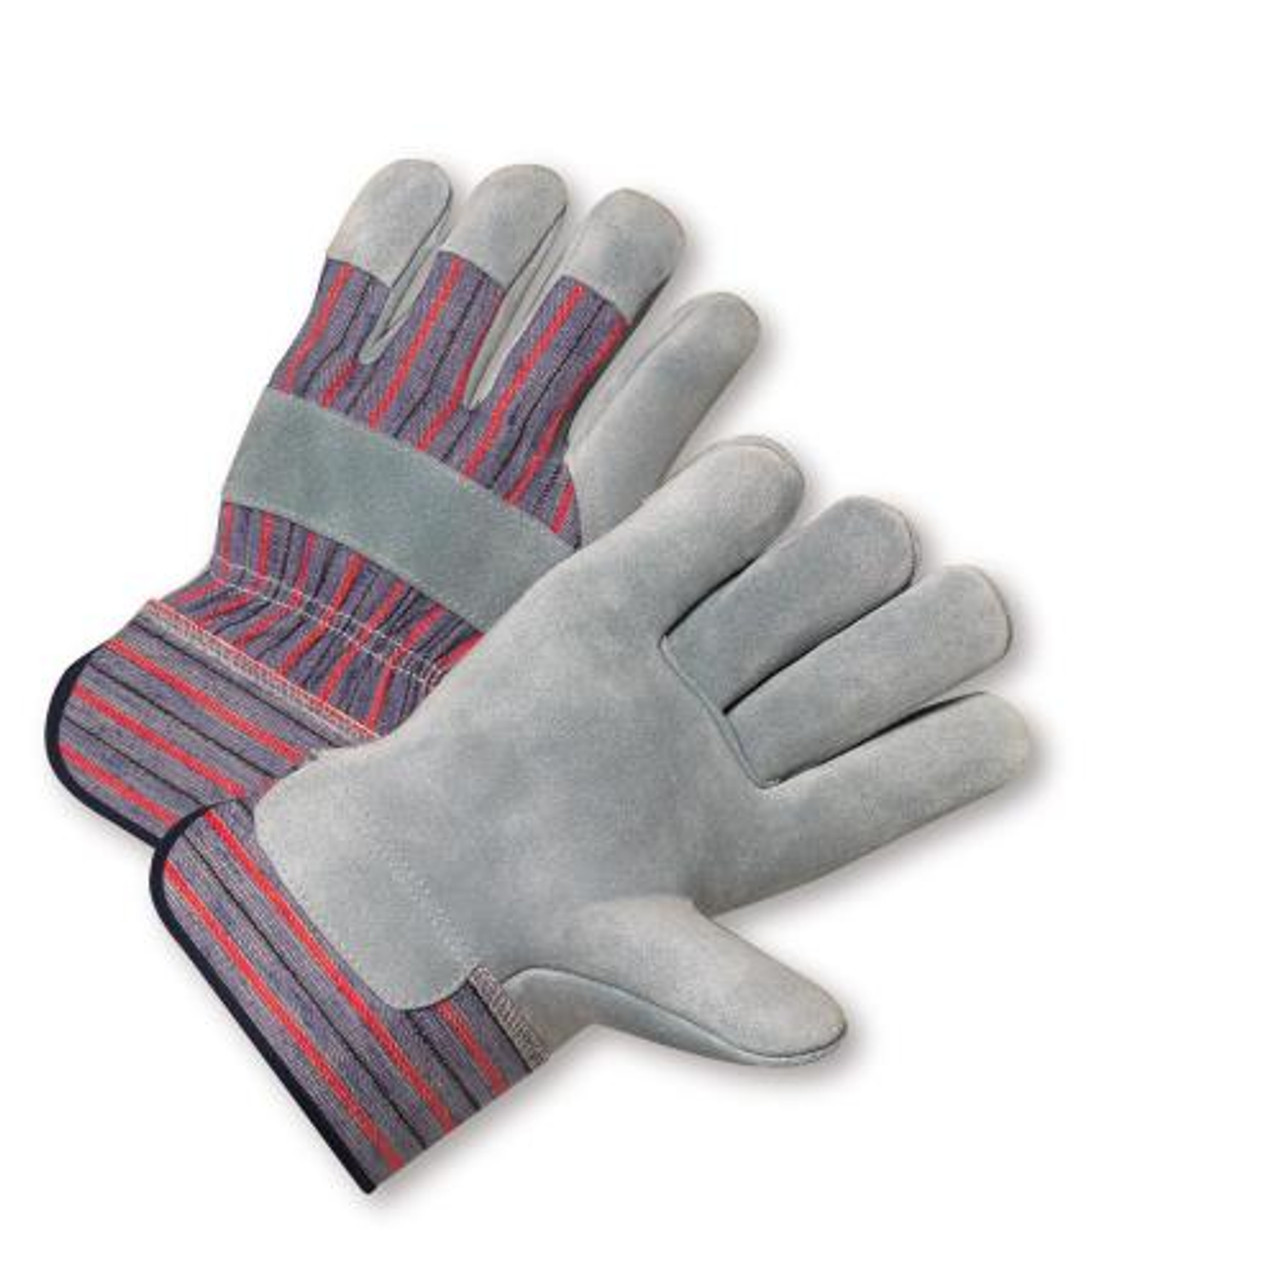 Original Mechanics Gloves (Red) (Large)